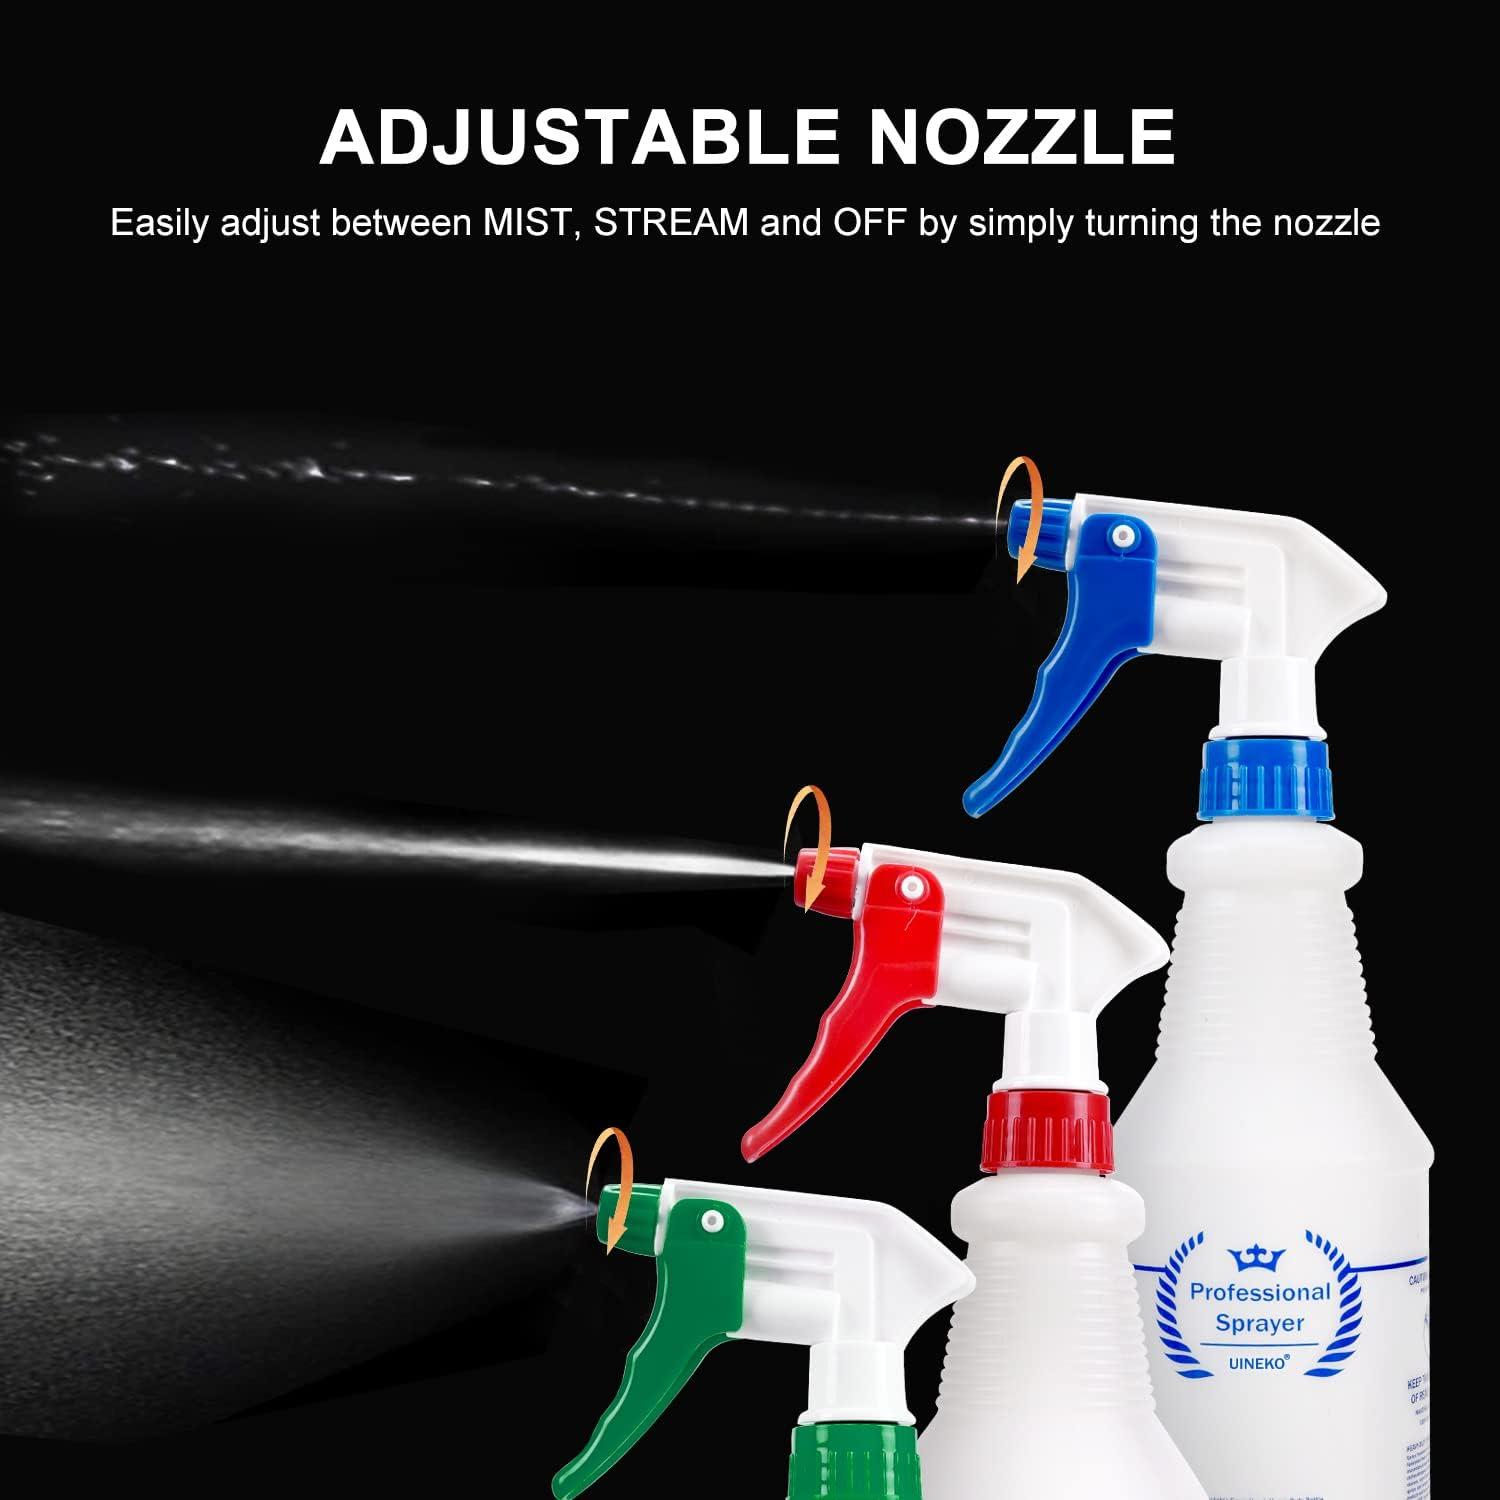 Bealee + All-Purpose Heavy Duty Plastic Spray Bottle 2 Pack, 24 Oz